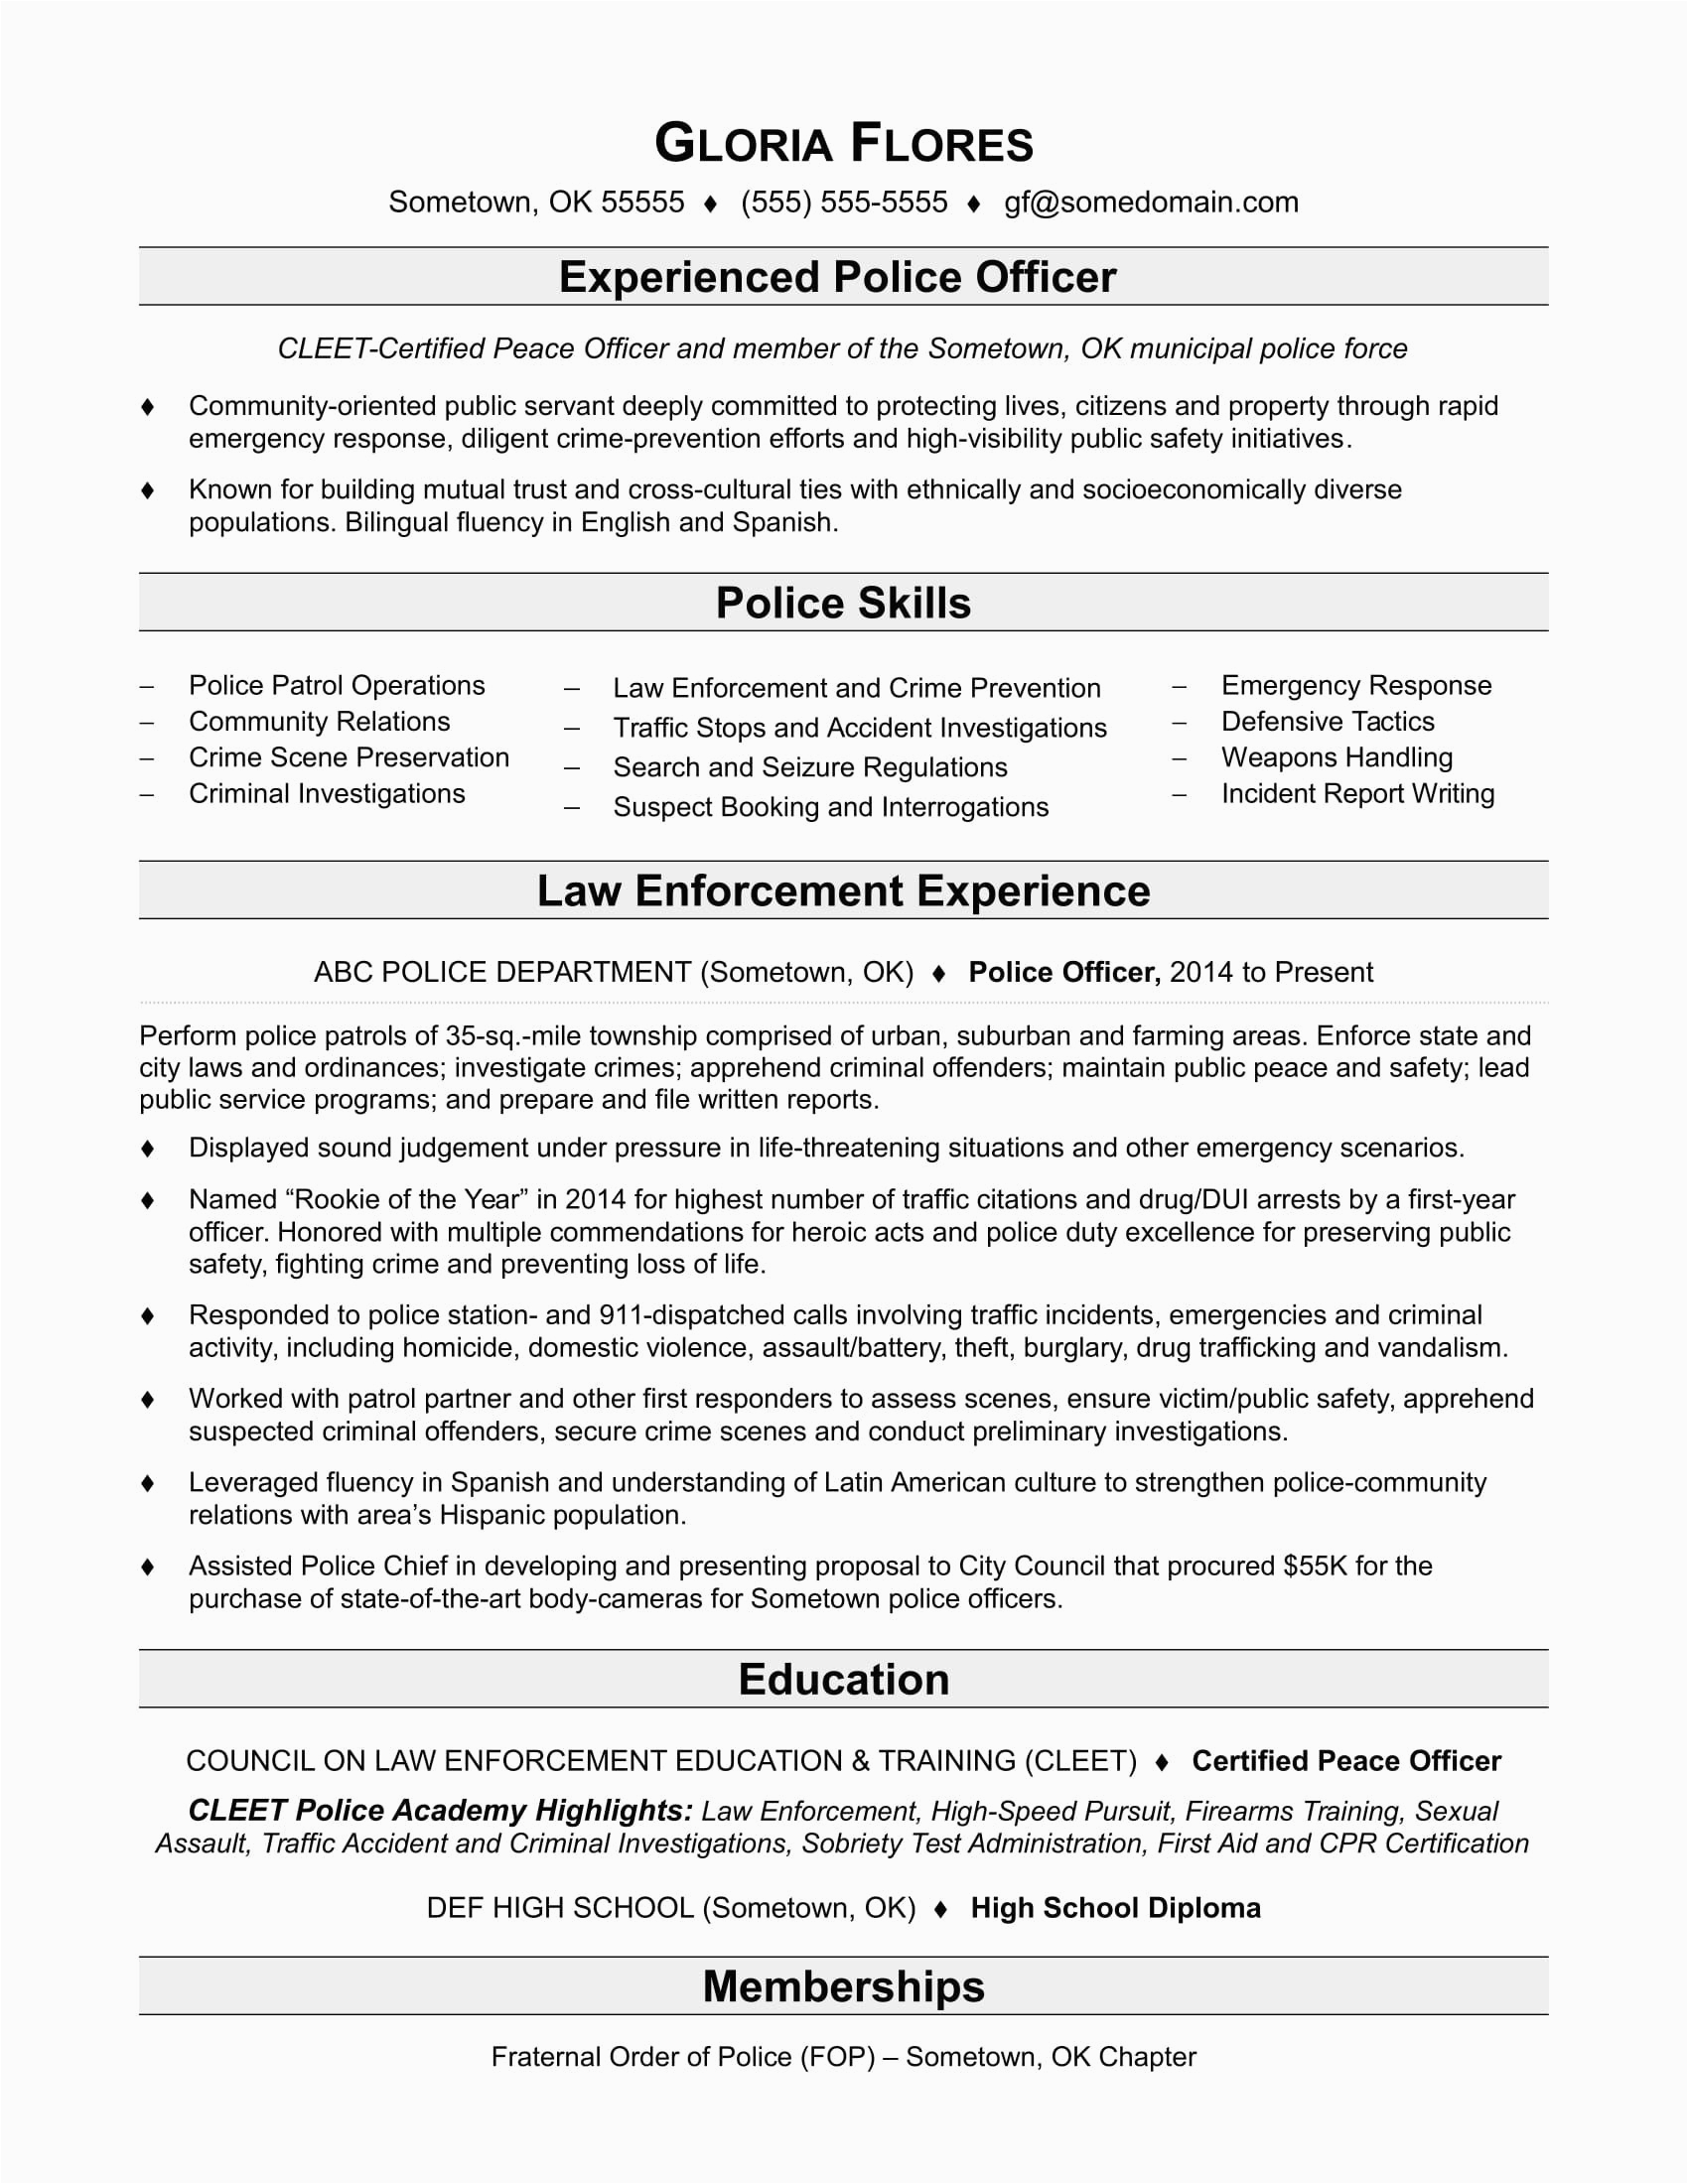 Sample Resume Objective for Law Enforcement Resume Examples Law Enforcement Resume Templates